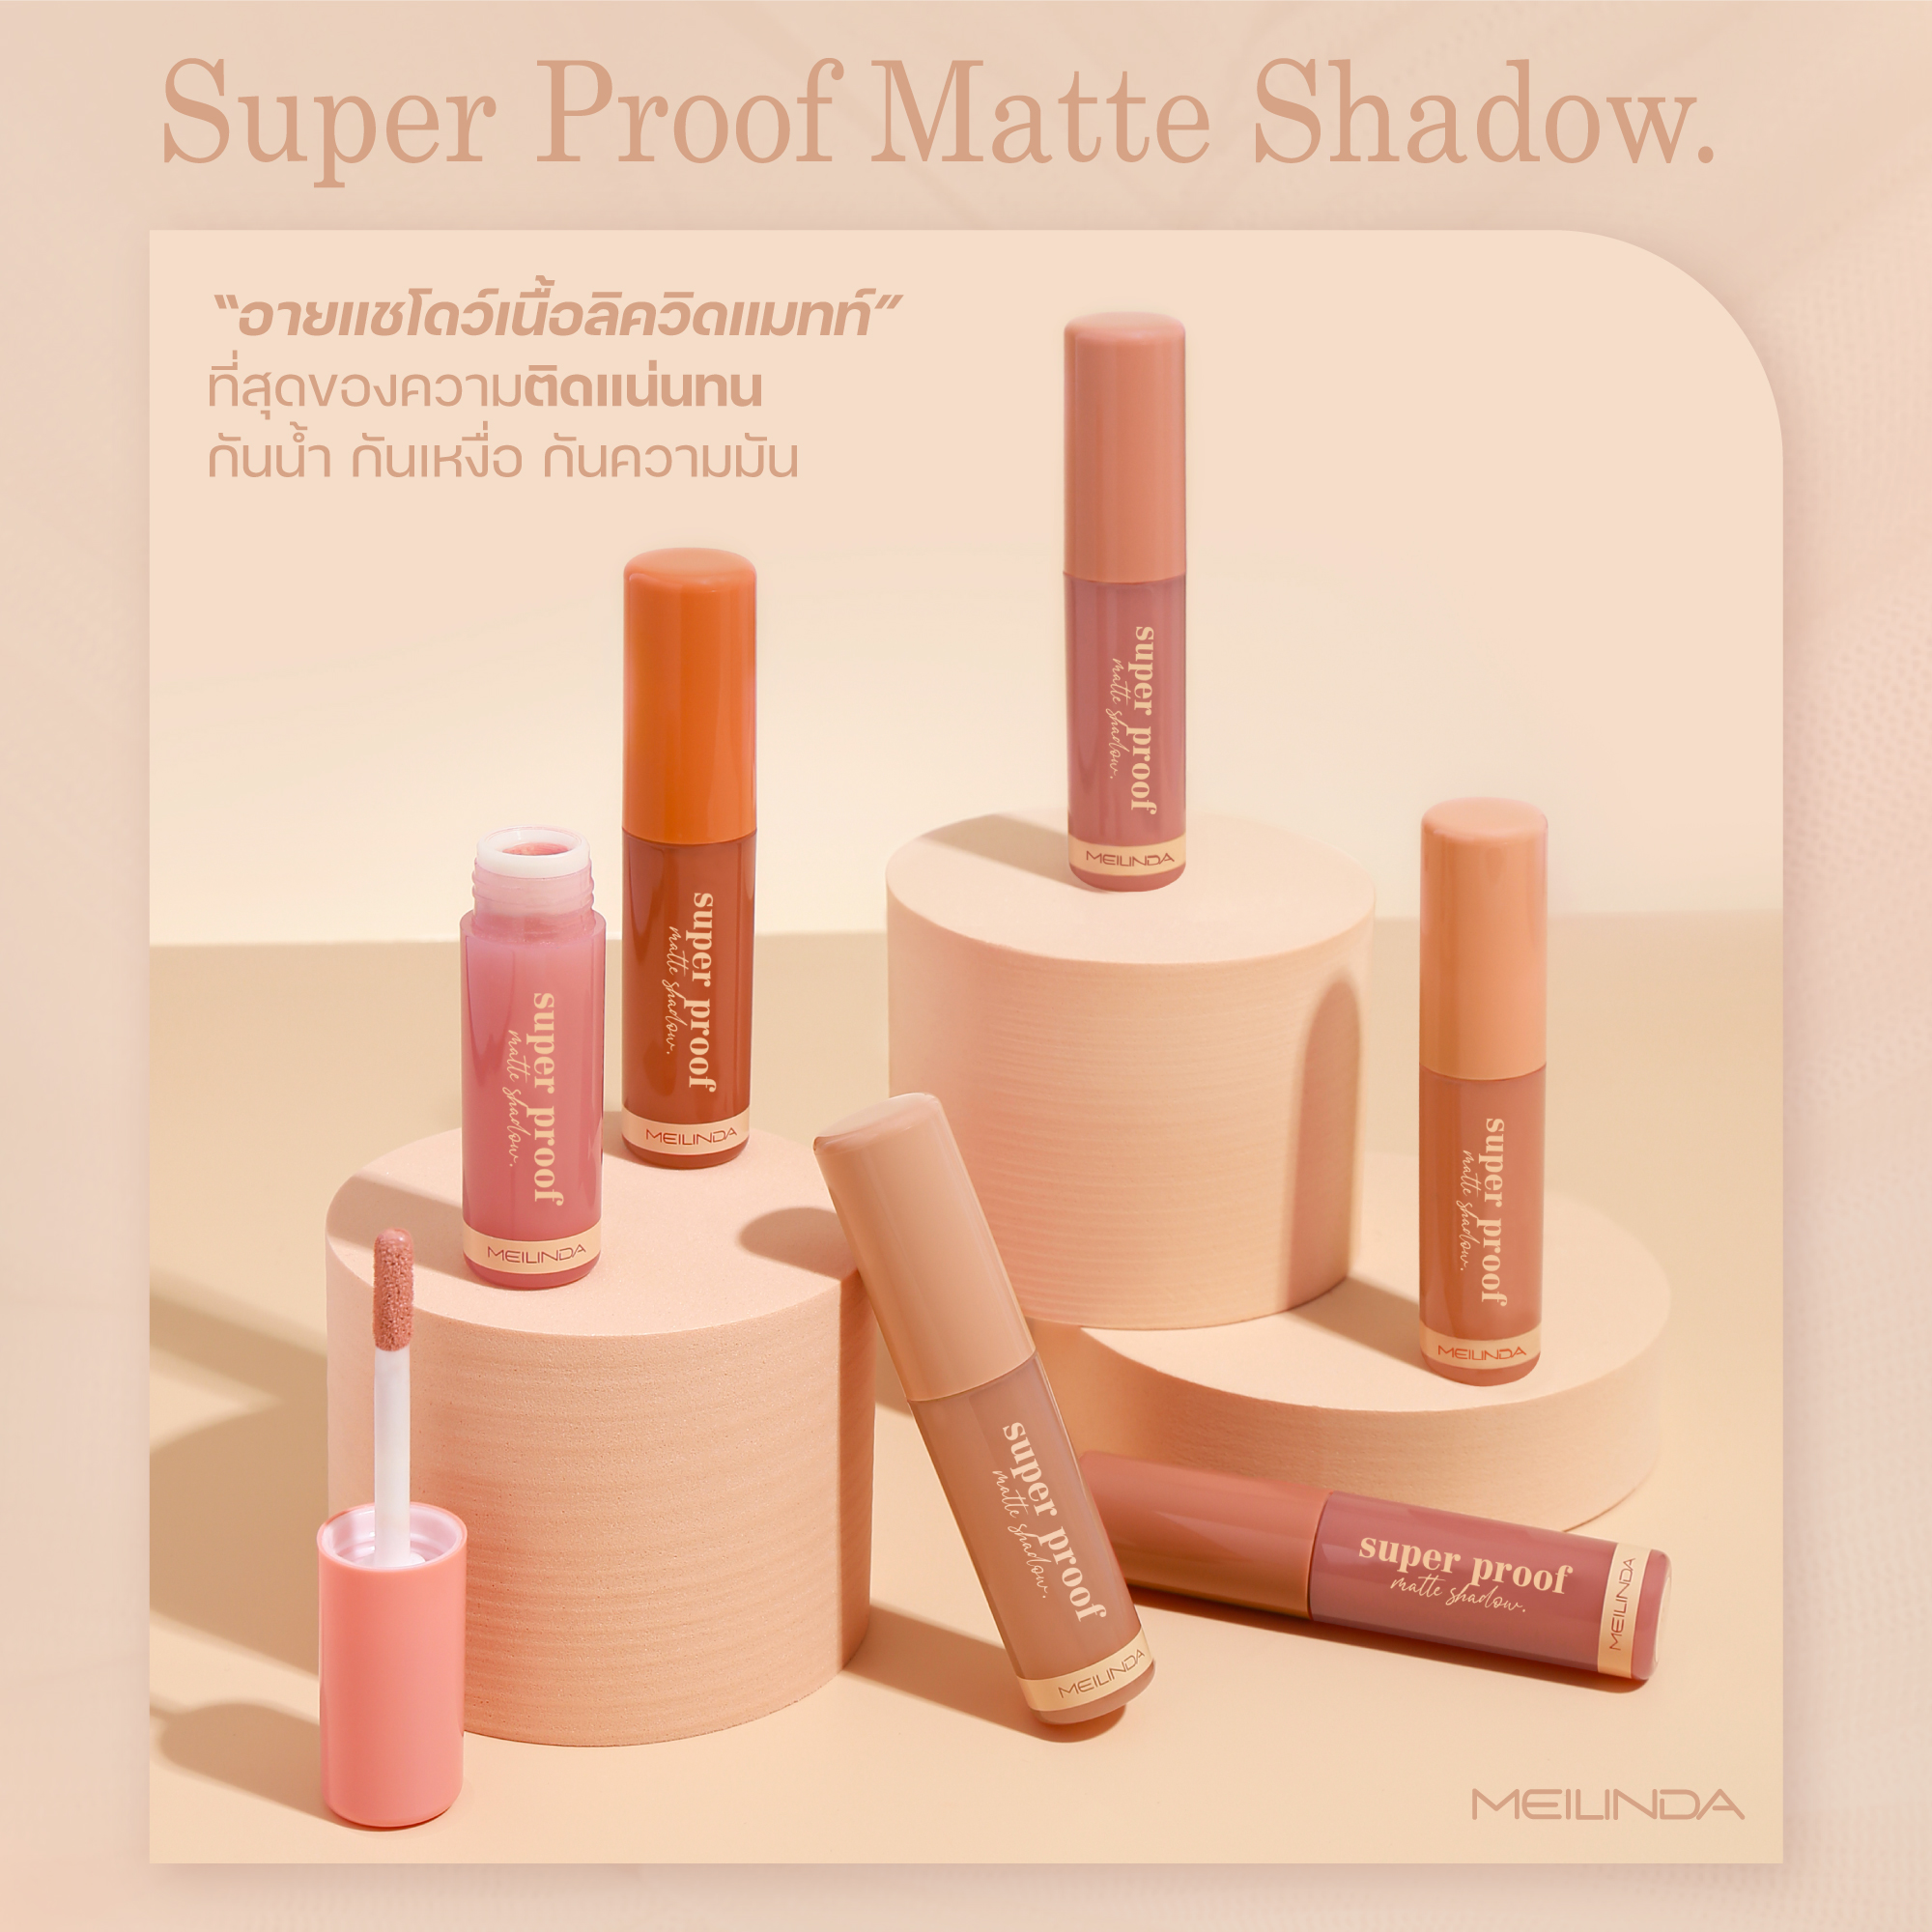 Super proof matte shadow